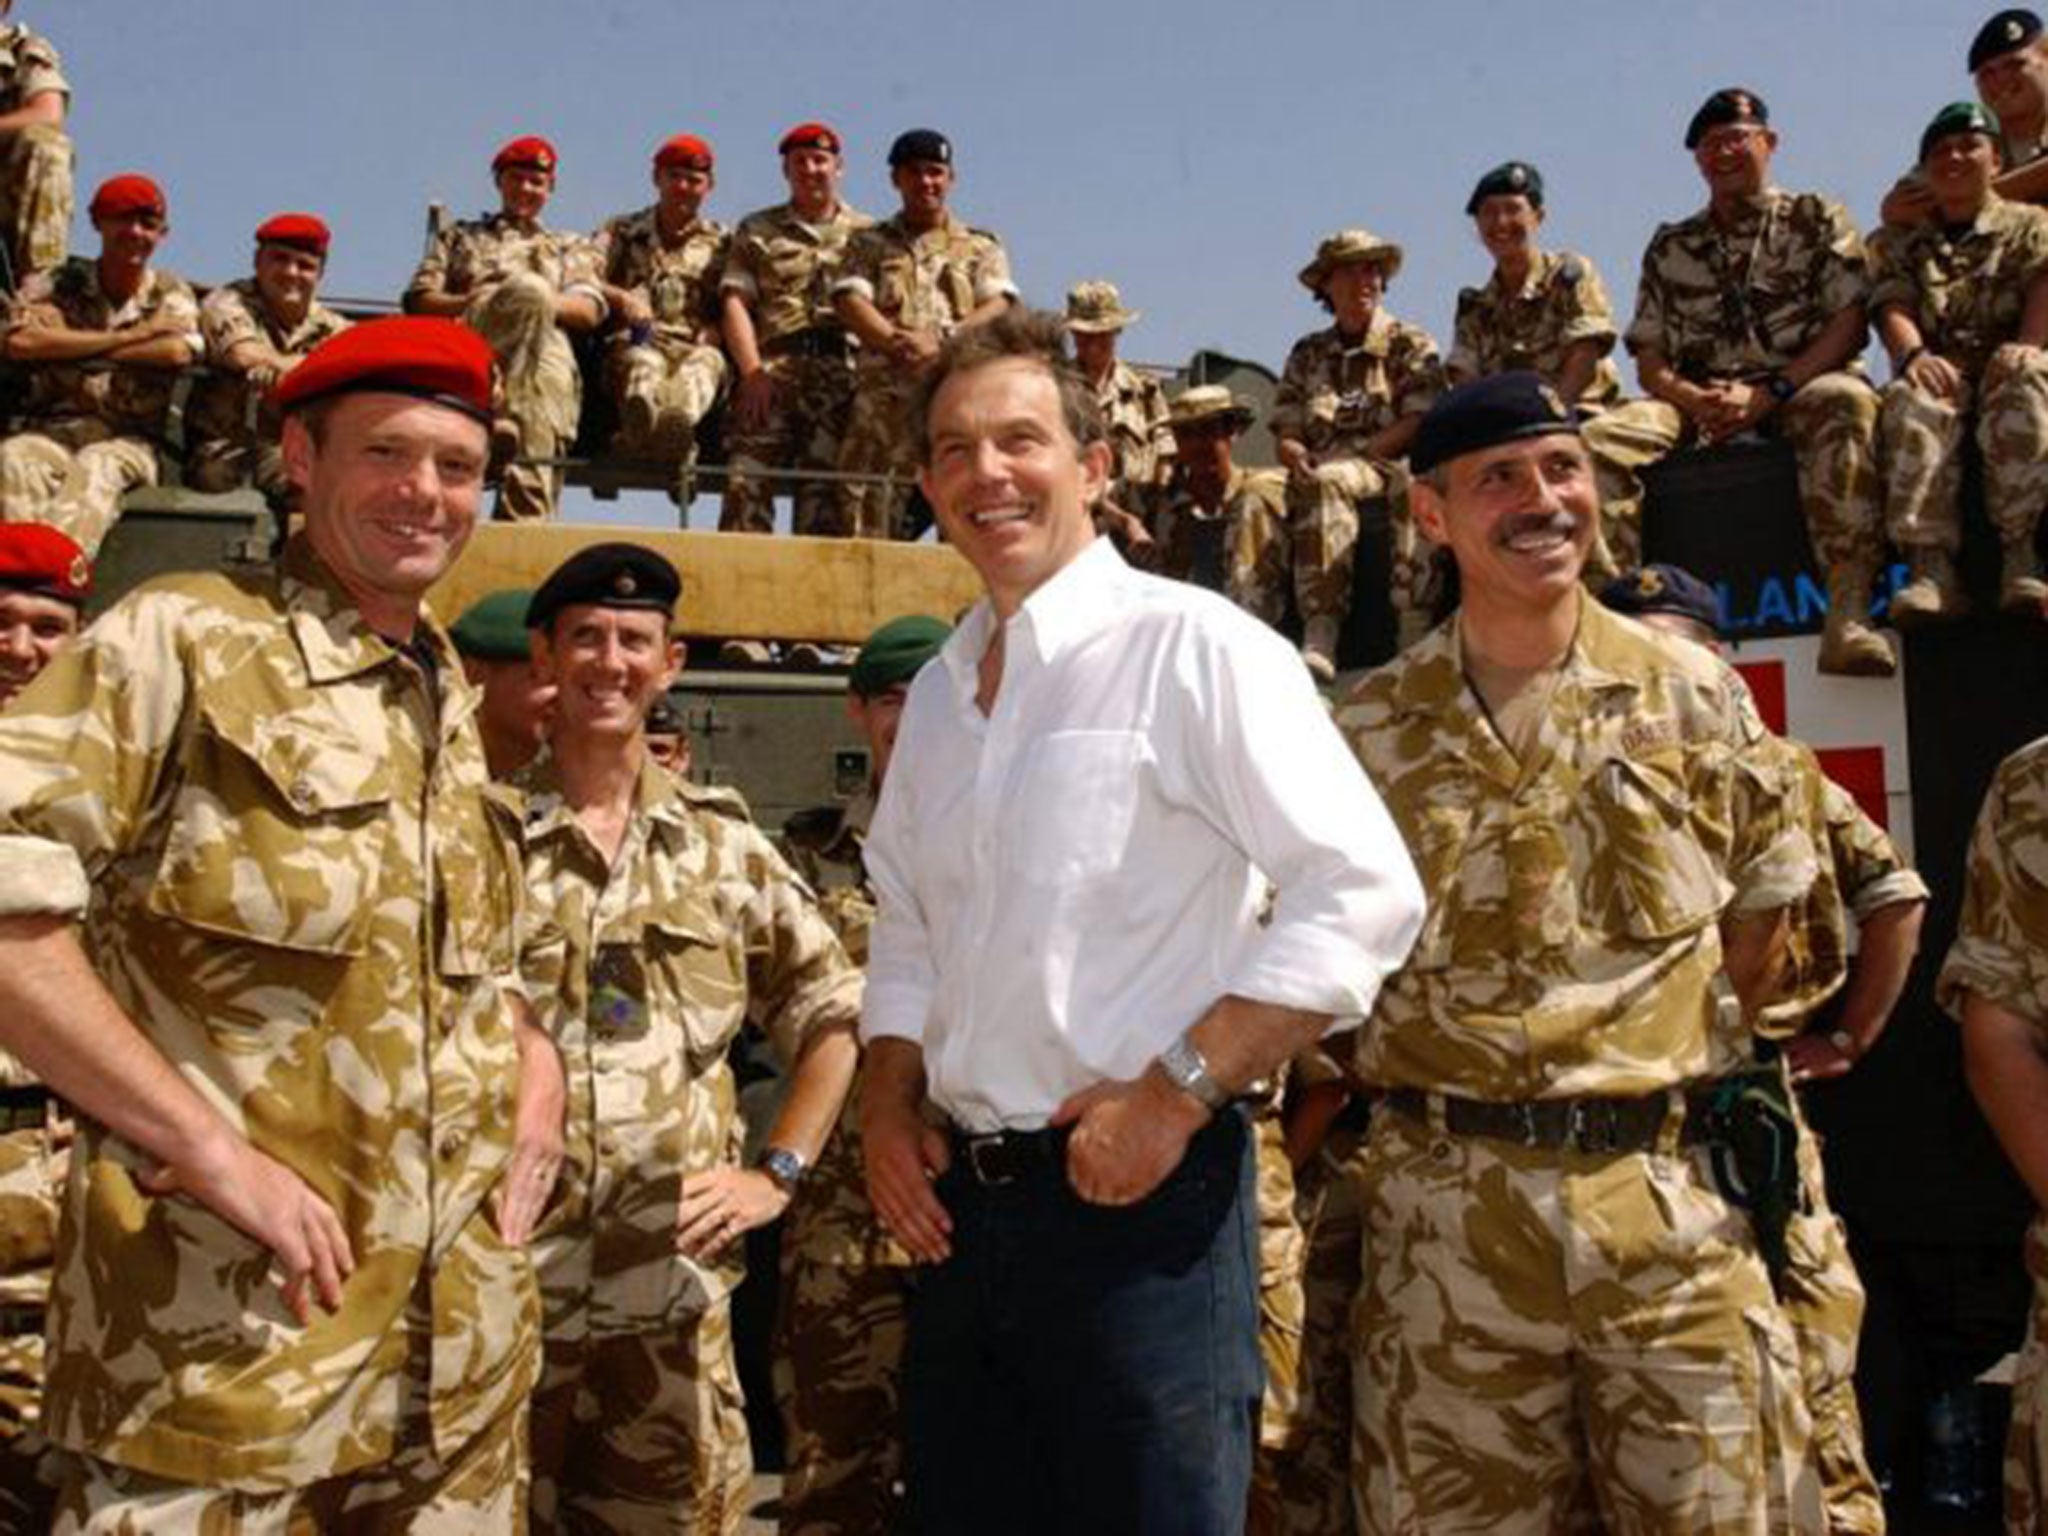 Tony Blair meeting troops in the port of Umm Qasr, Iraq in May, 2003